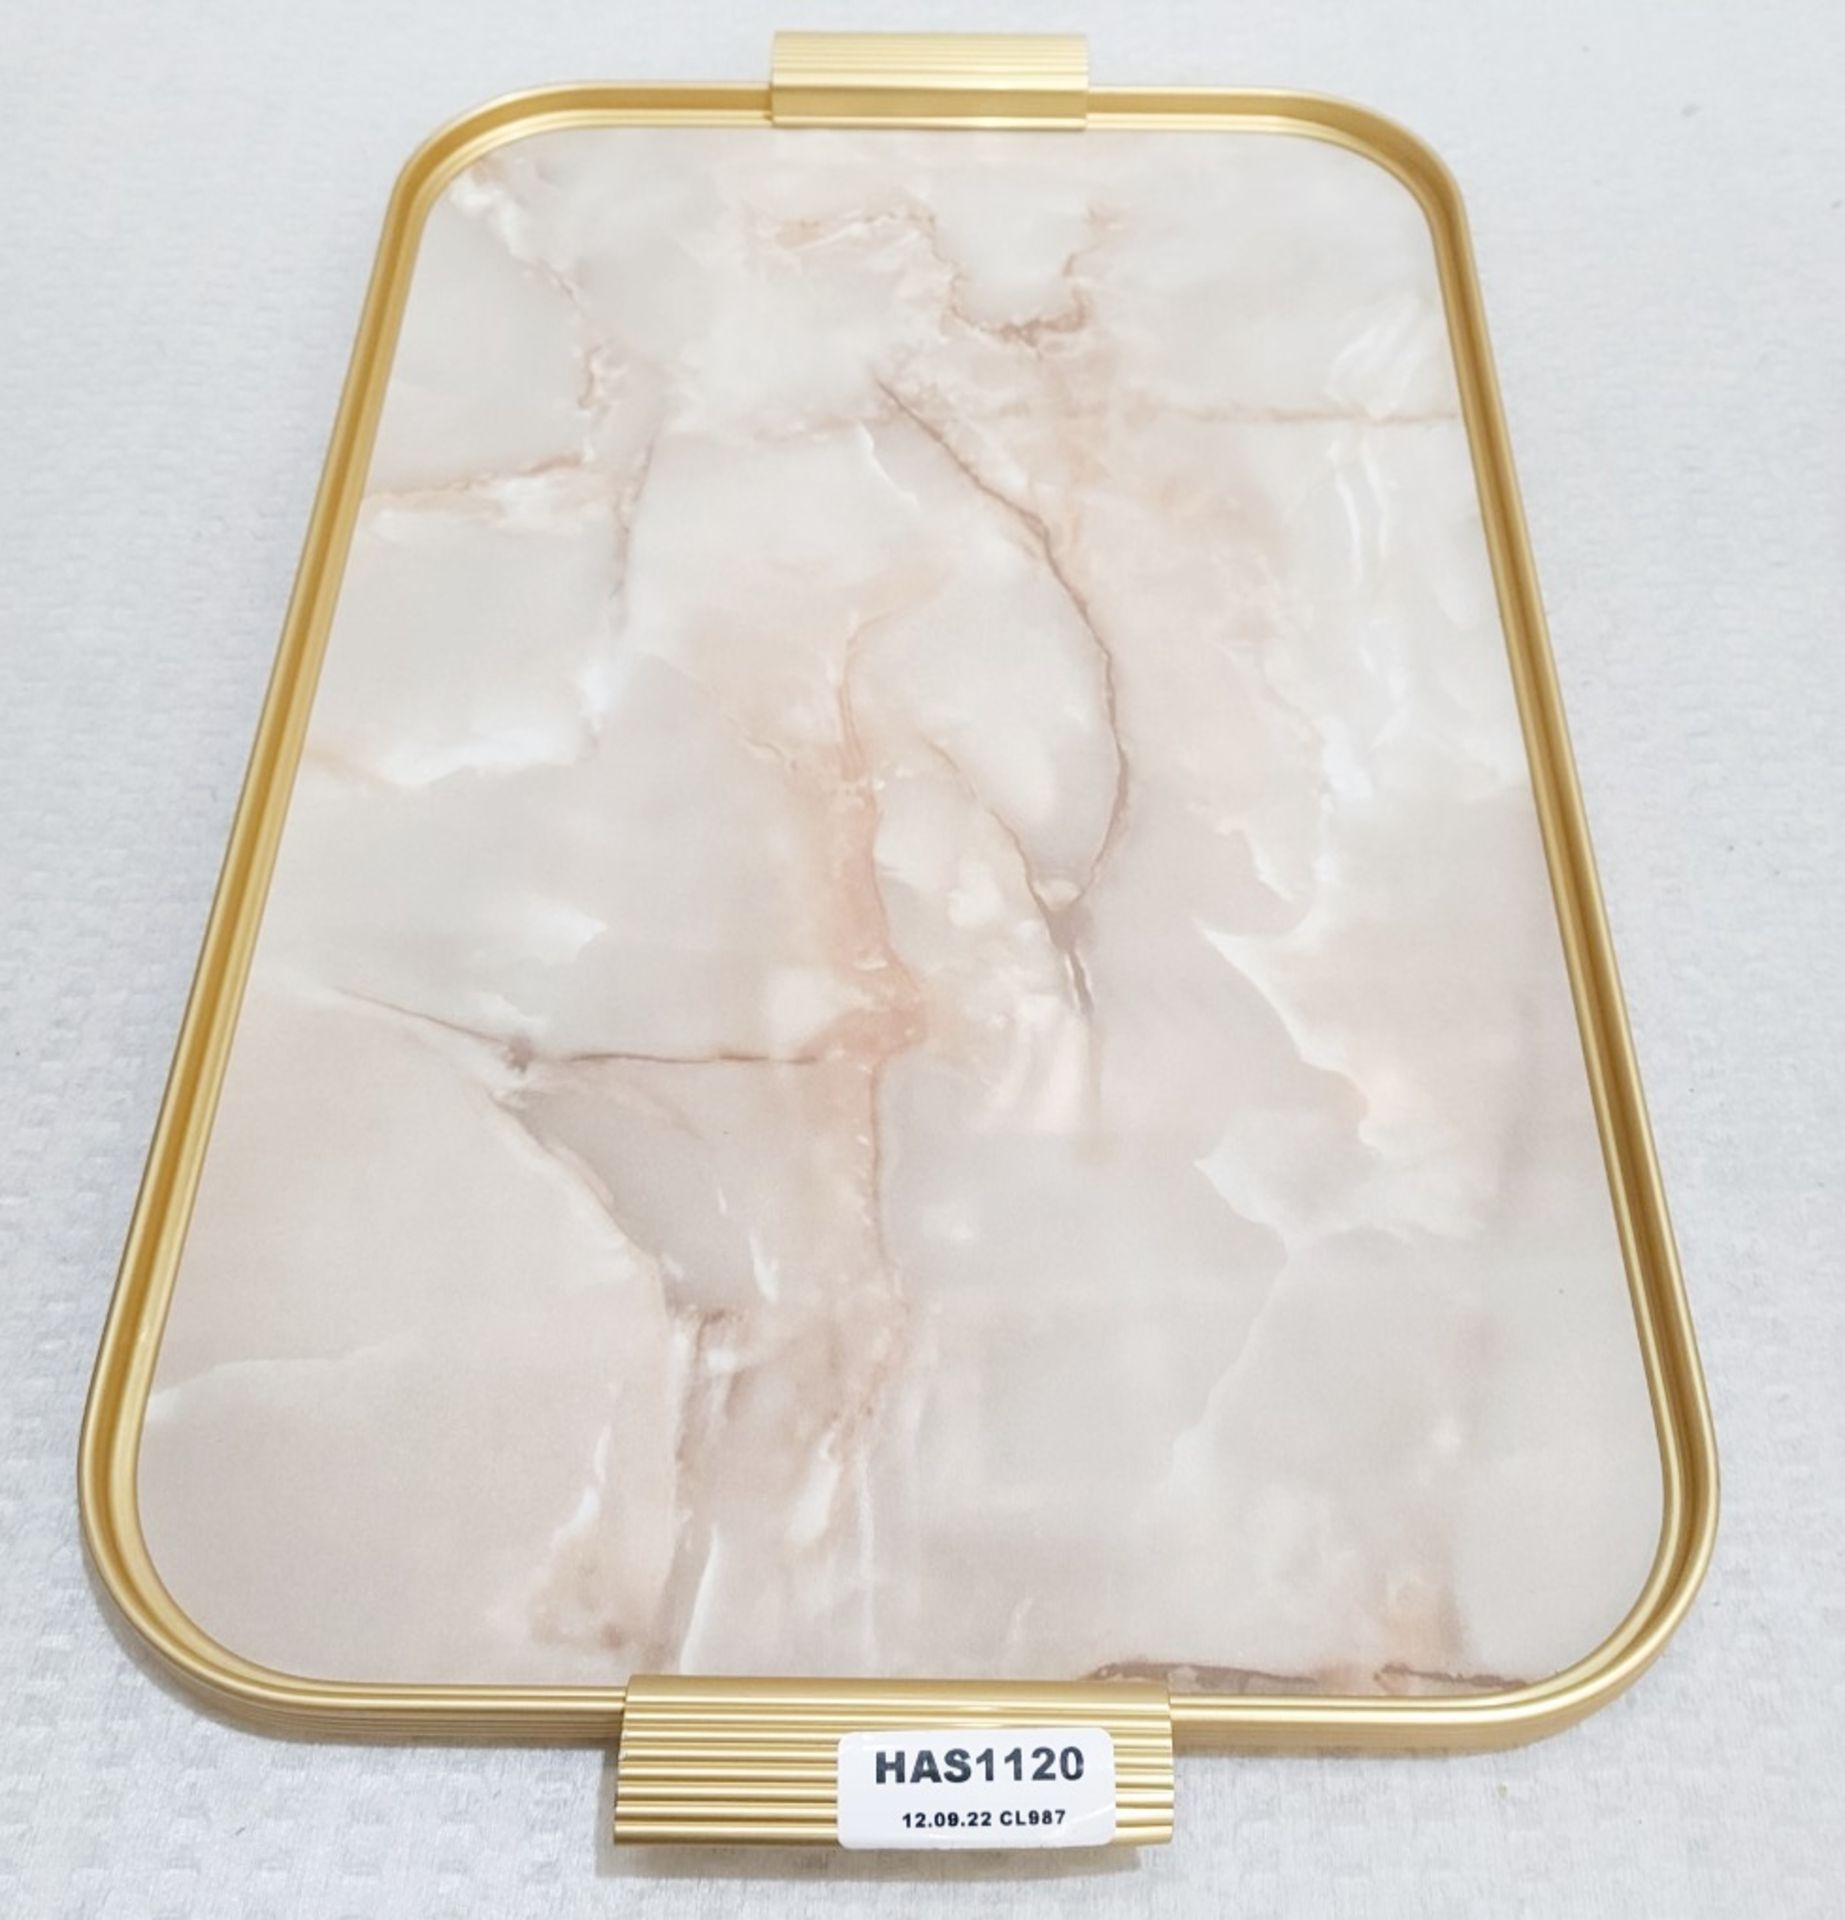 1 x KAYMET Ribbed Tray Onyx Marble (51cm) - Original Price £149.00 - Image 4 of 4